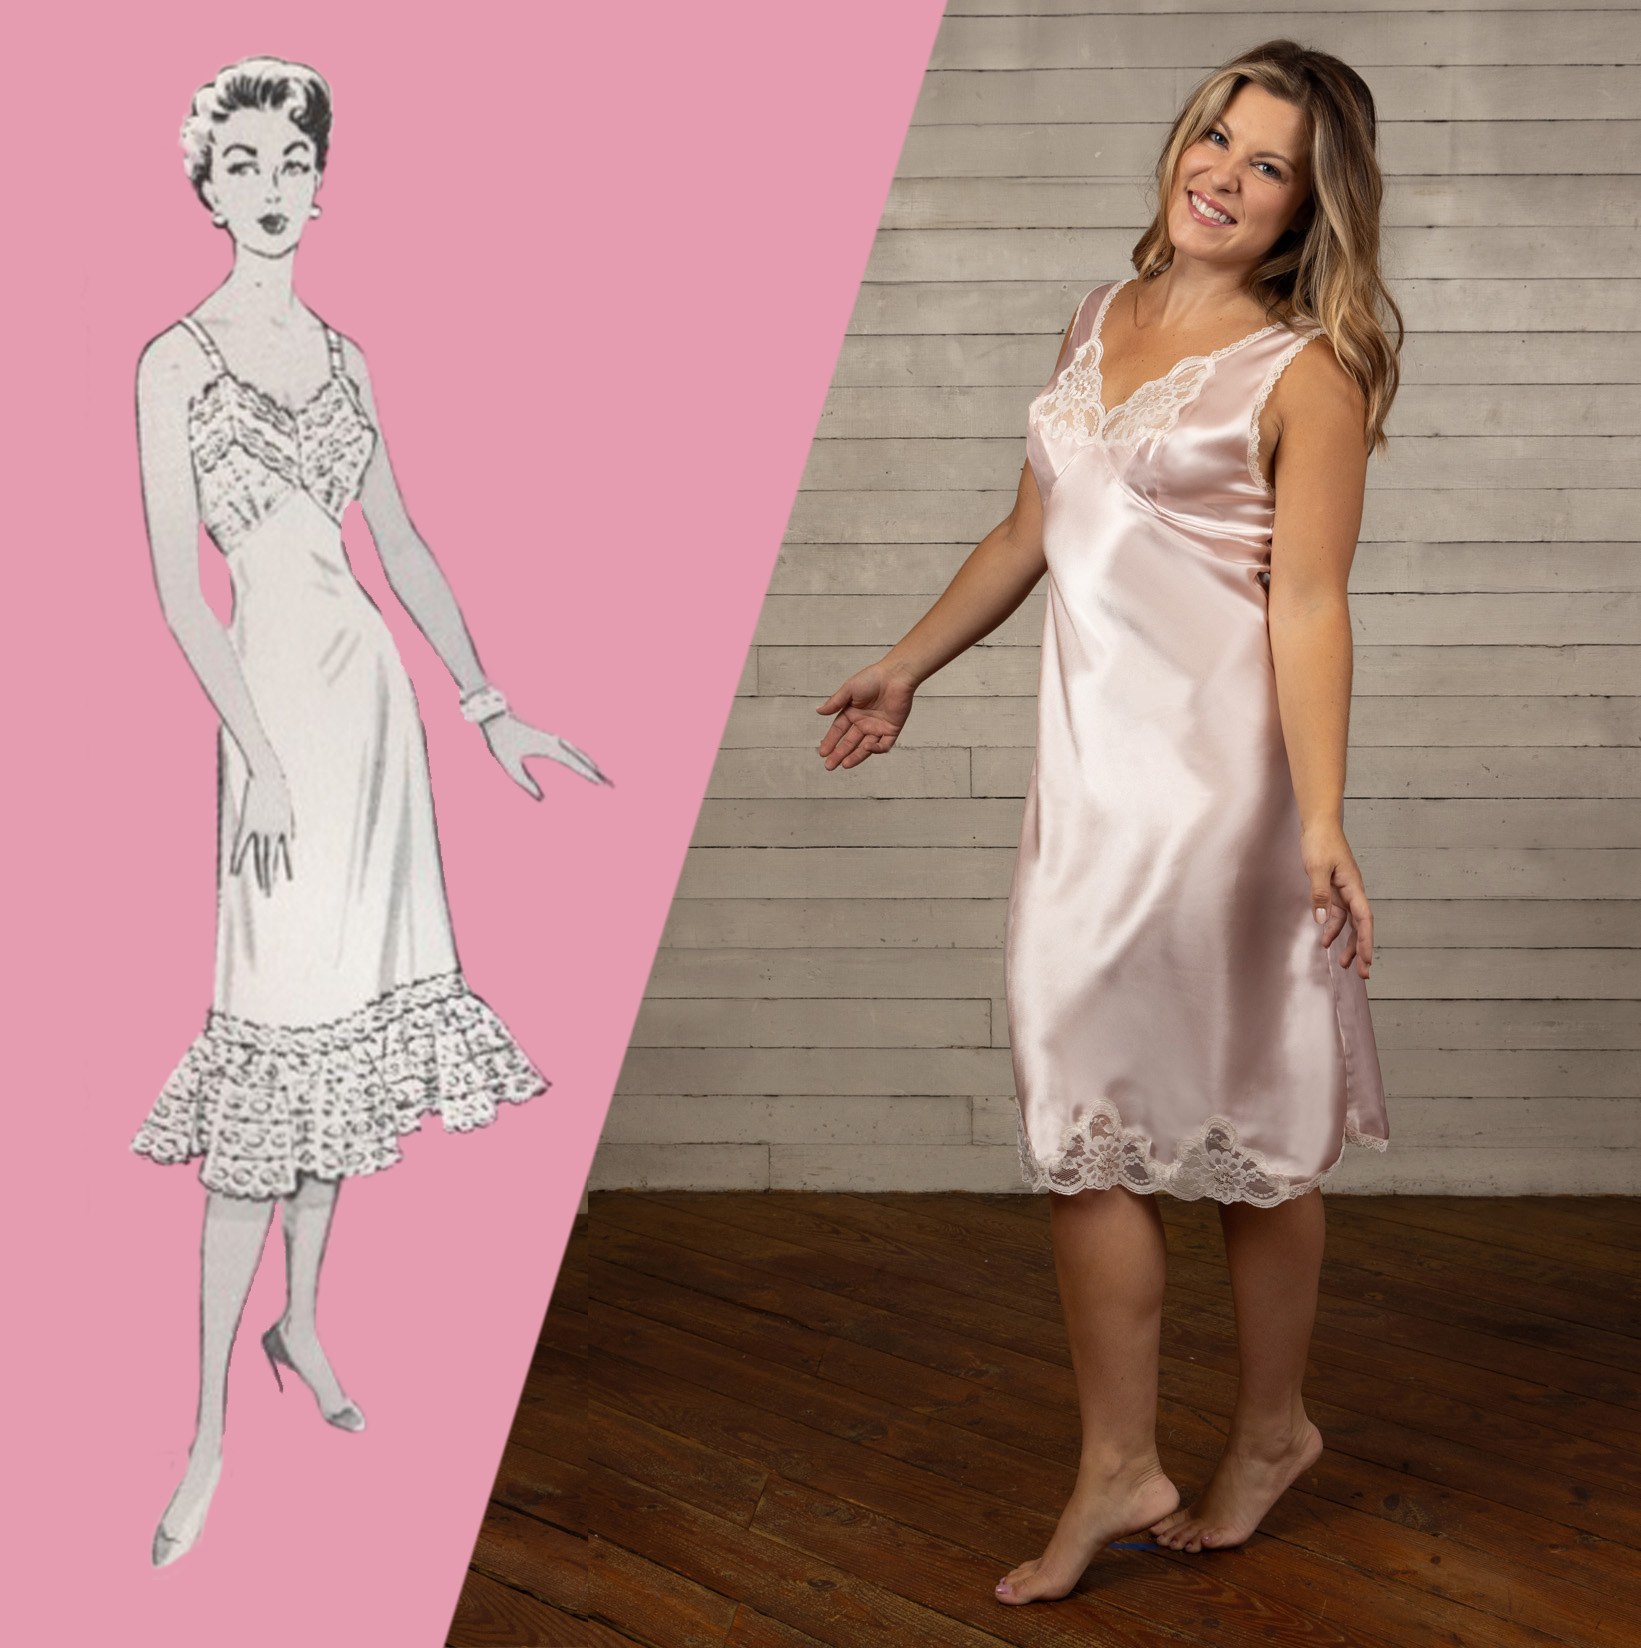 1950 women's pink Night-n-Day pantie girdle bra vintage fashion ad 